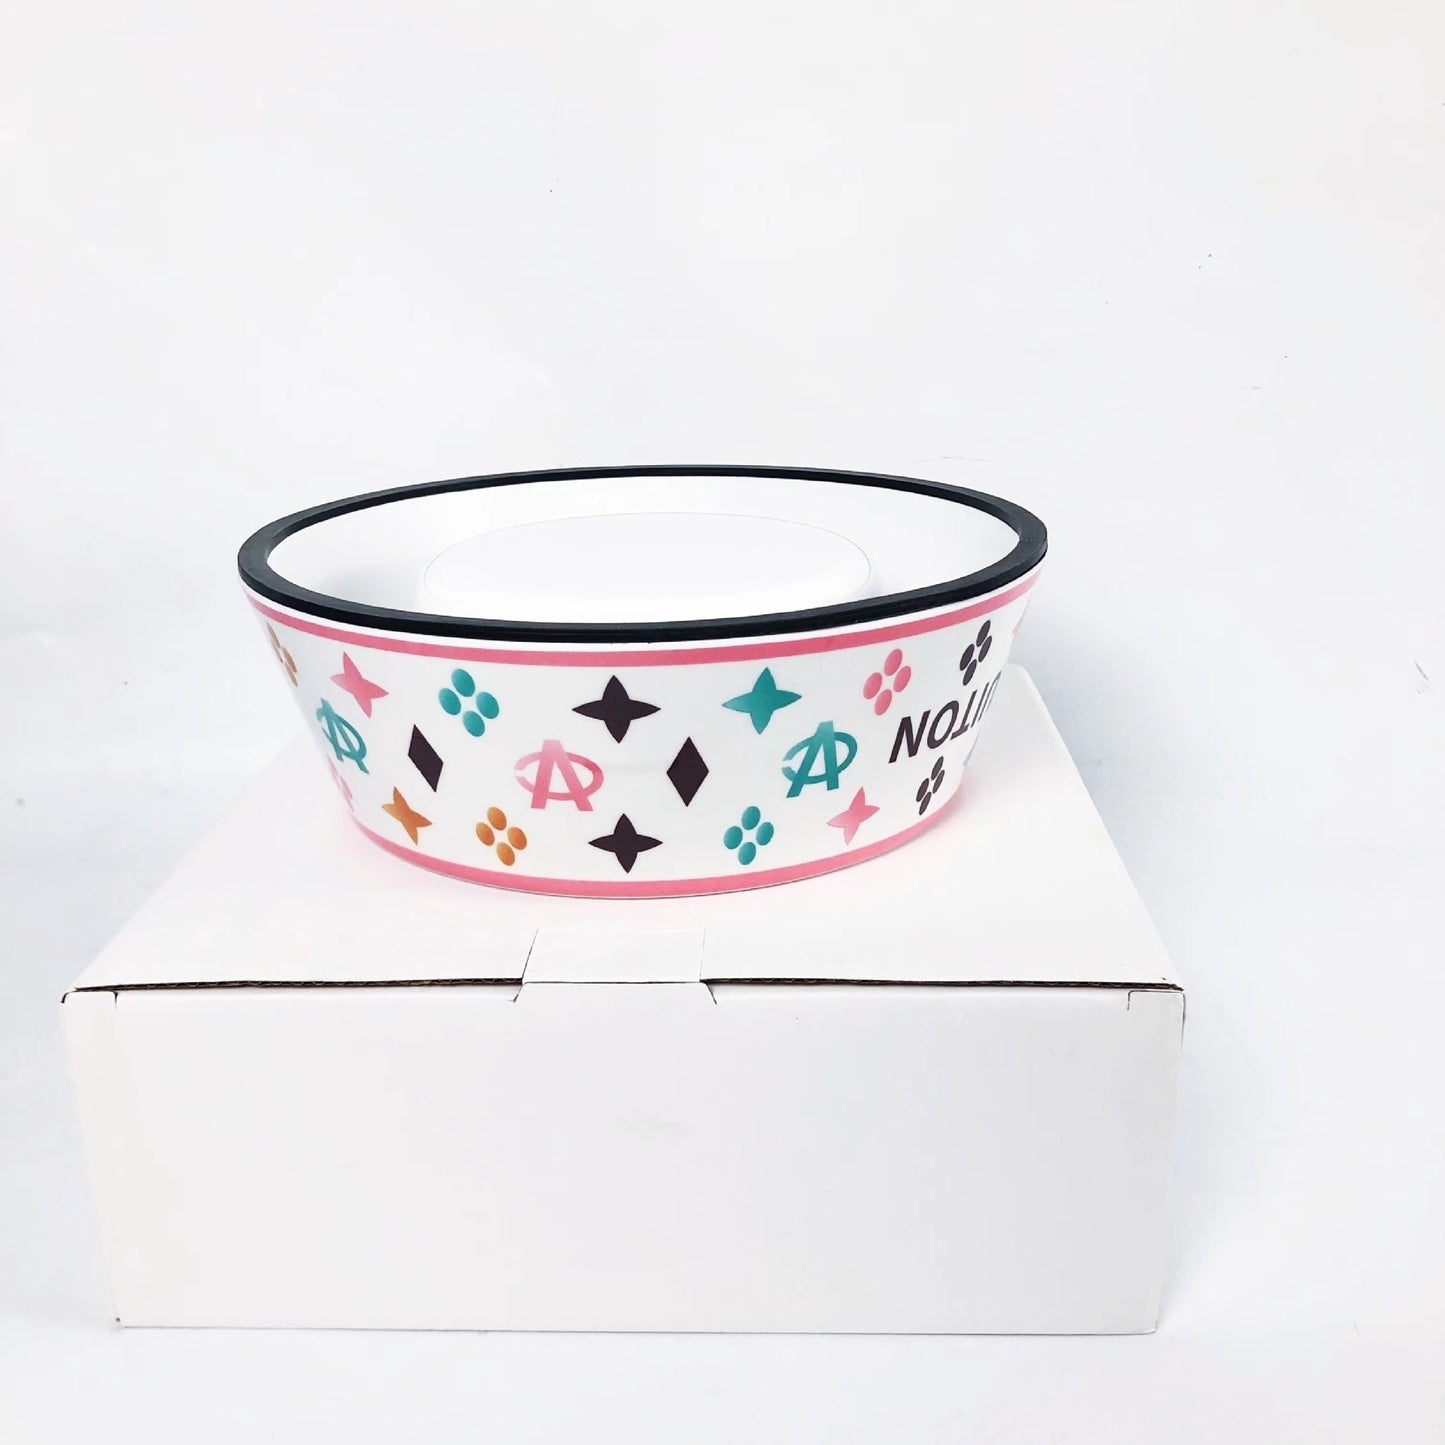 Luxury designer ceramic bowl with non-slip placemat. Luxury chic accessories for your pet.